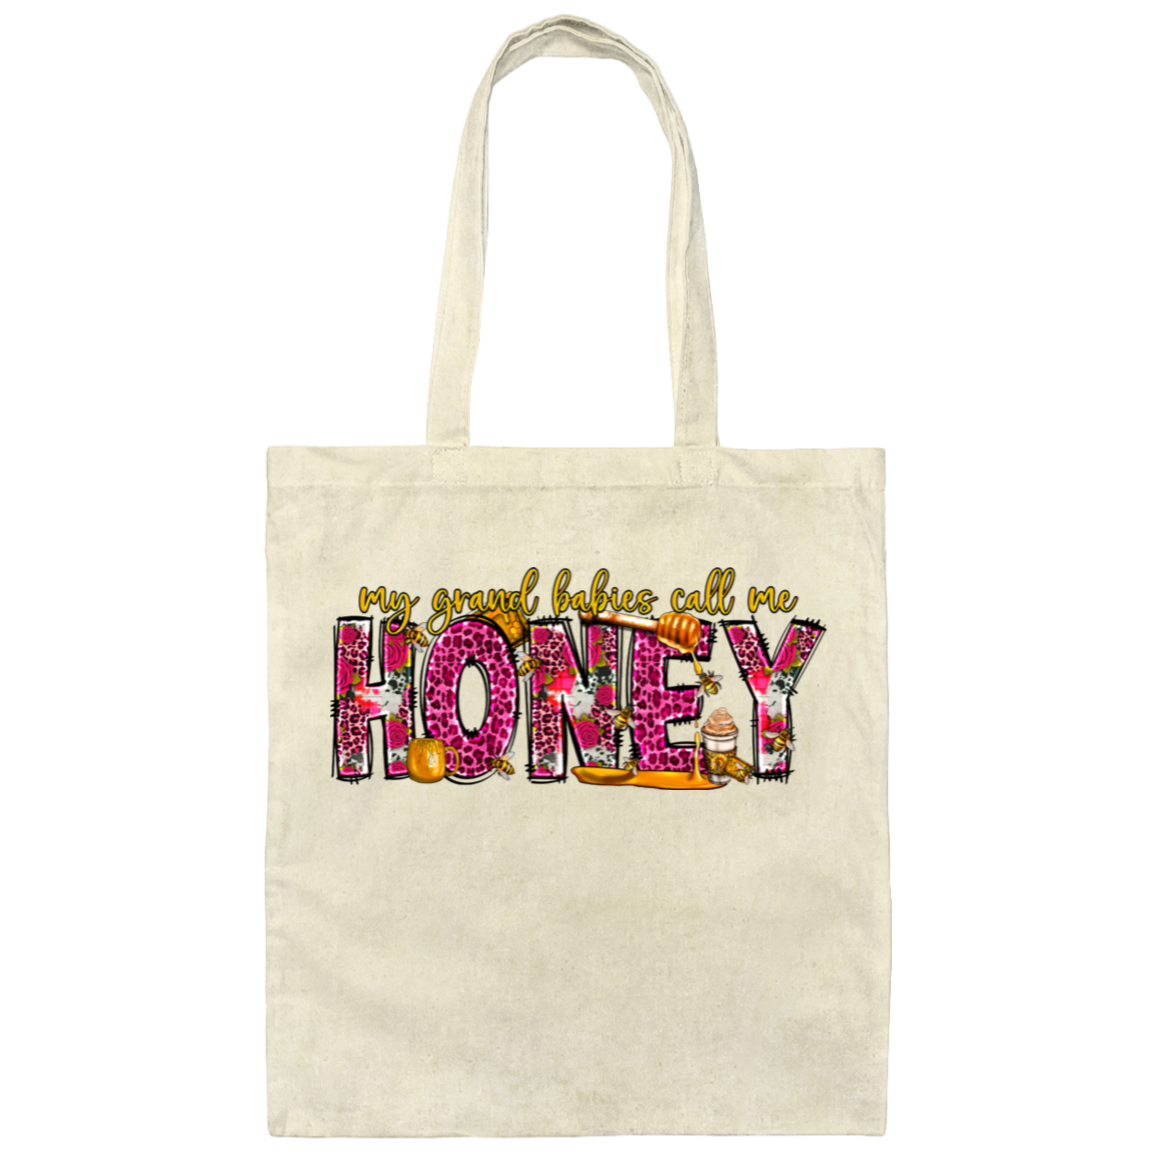 "My Grandbabies Call Me Honey" Canvas Tote Bag